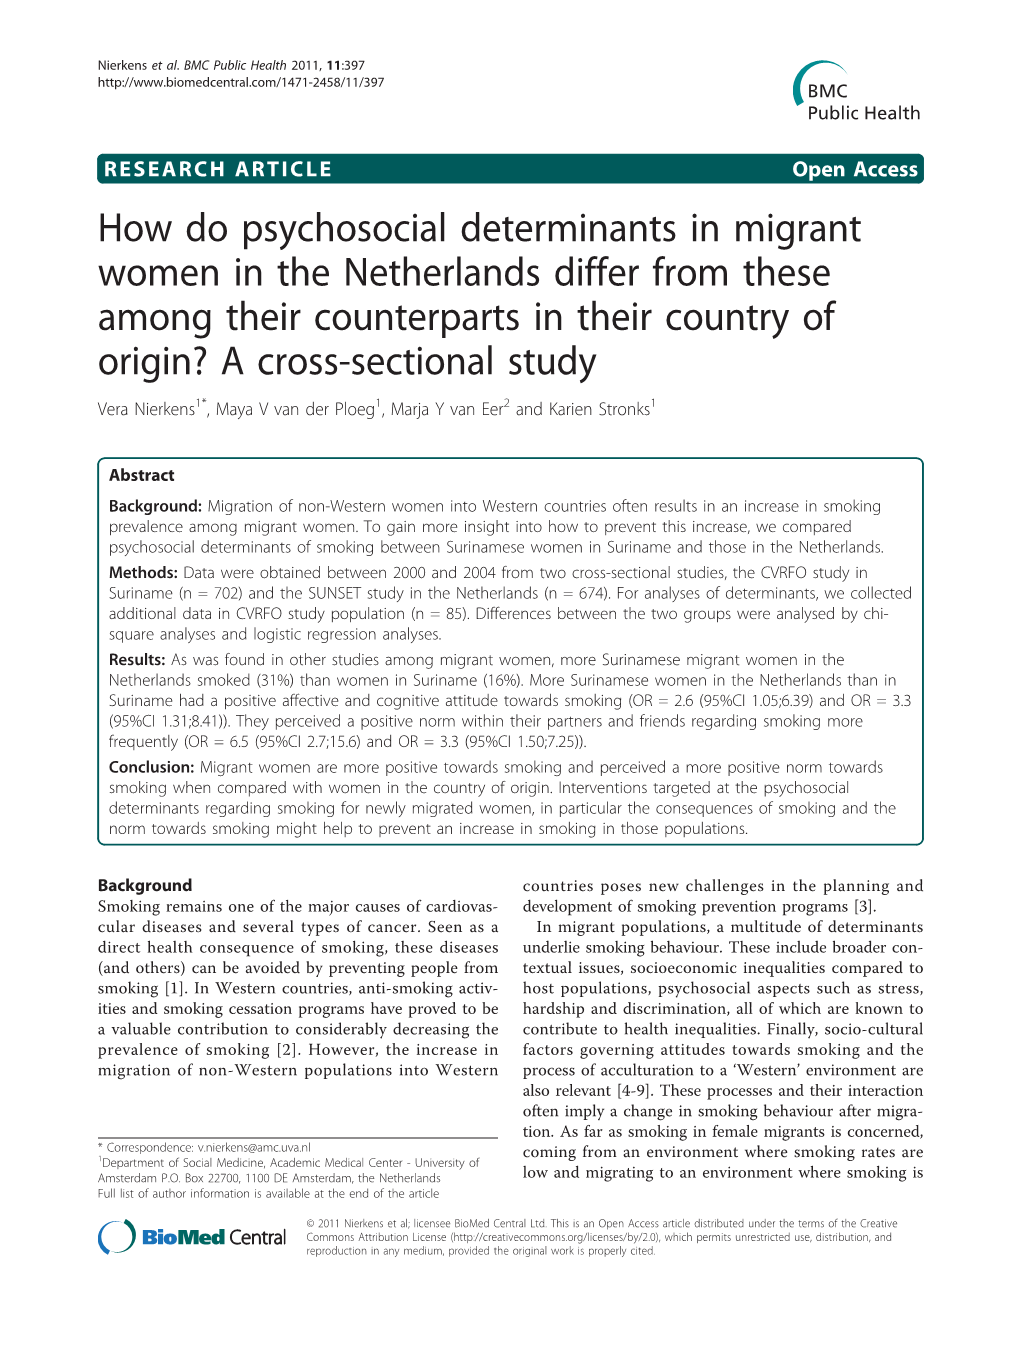 How Do Psychosocial Determinants in Migrant Women in the Netherlands